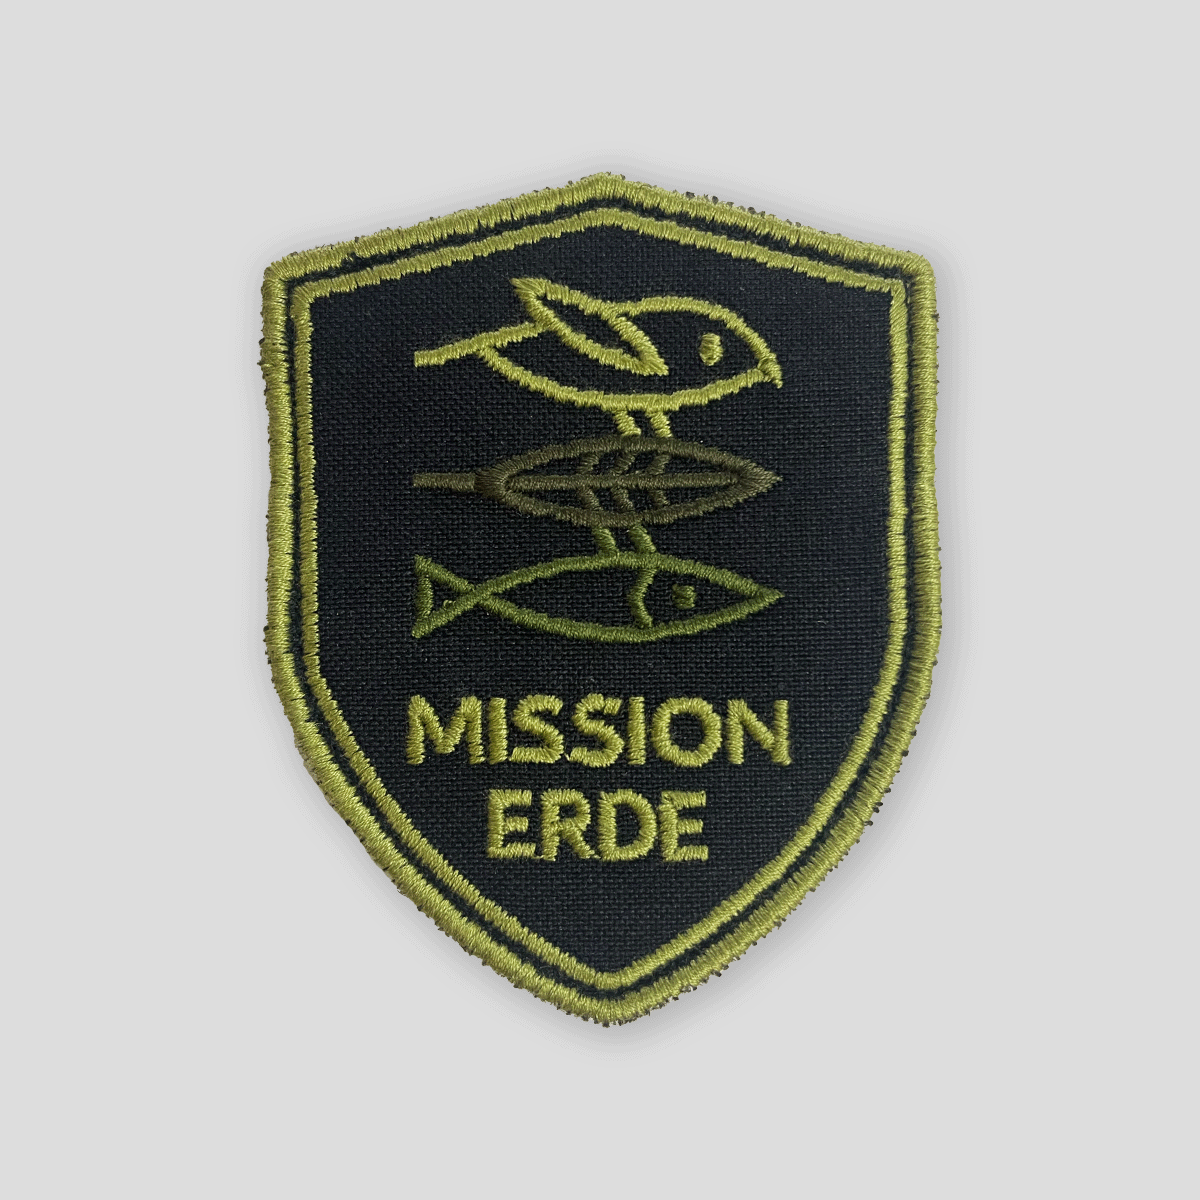 Patch "Mission Erde" Jungle